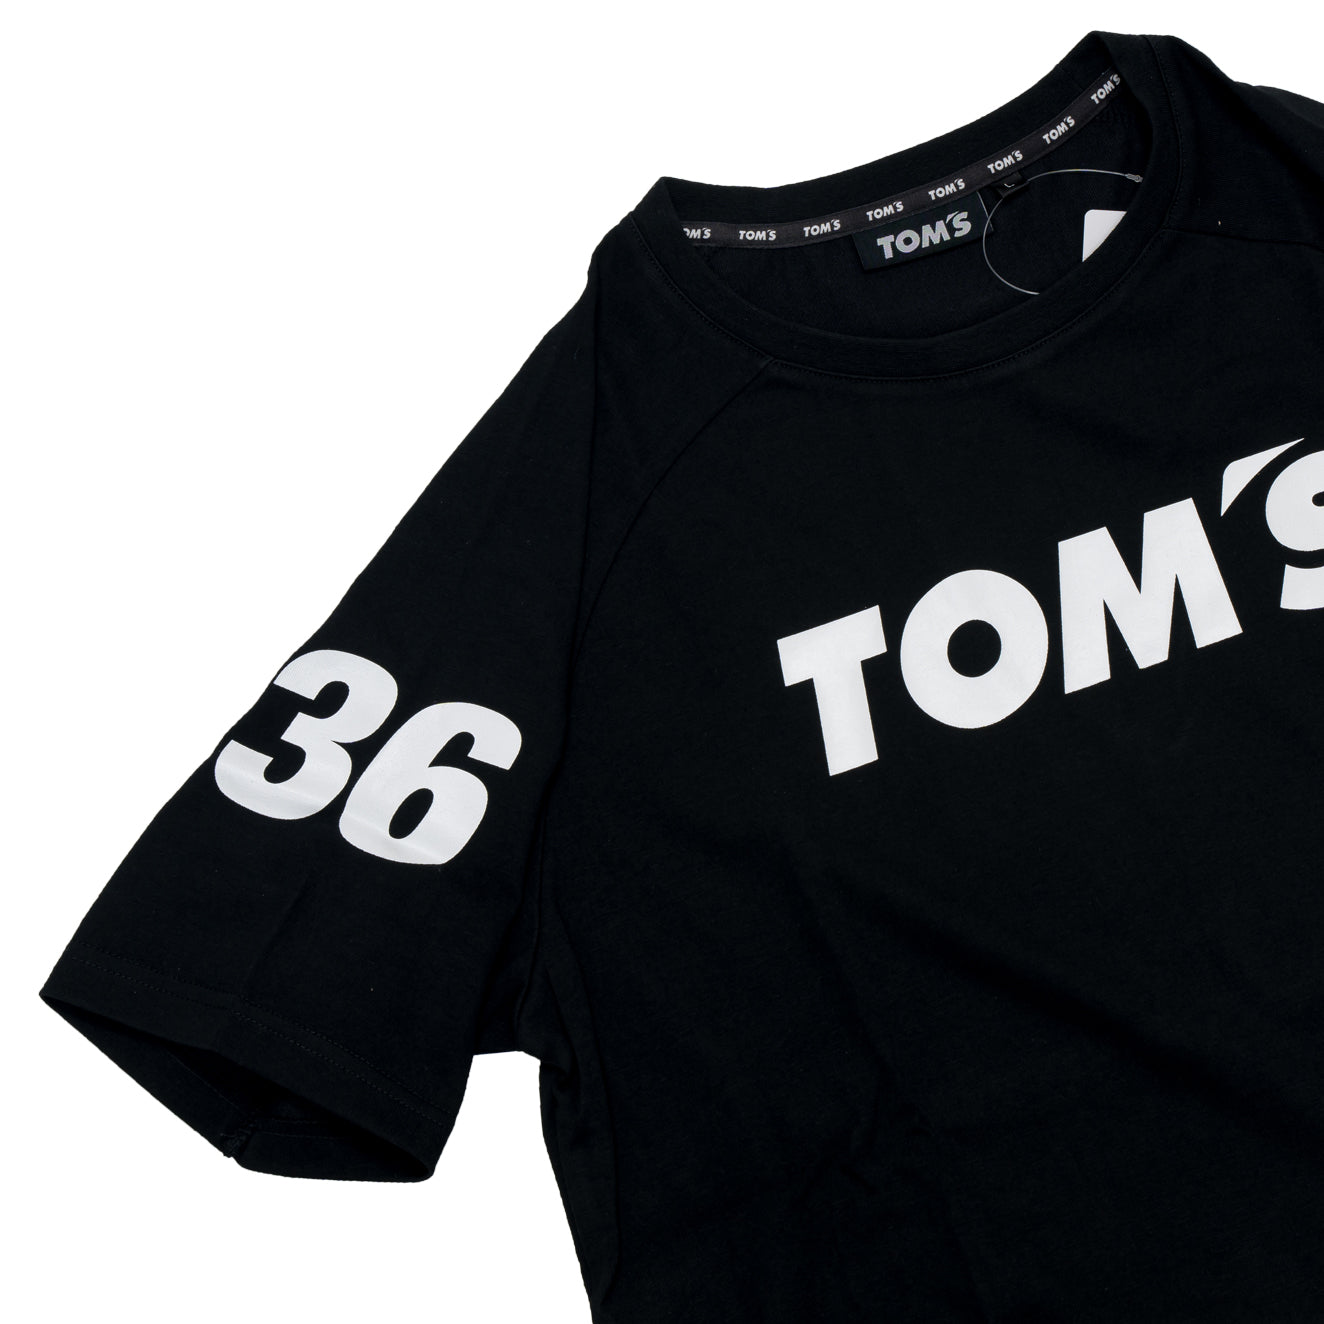 TOM'S Racing - Short Sleeve T-shirt #36 Black - 0